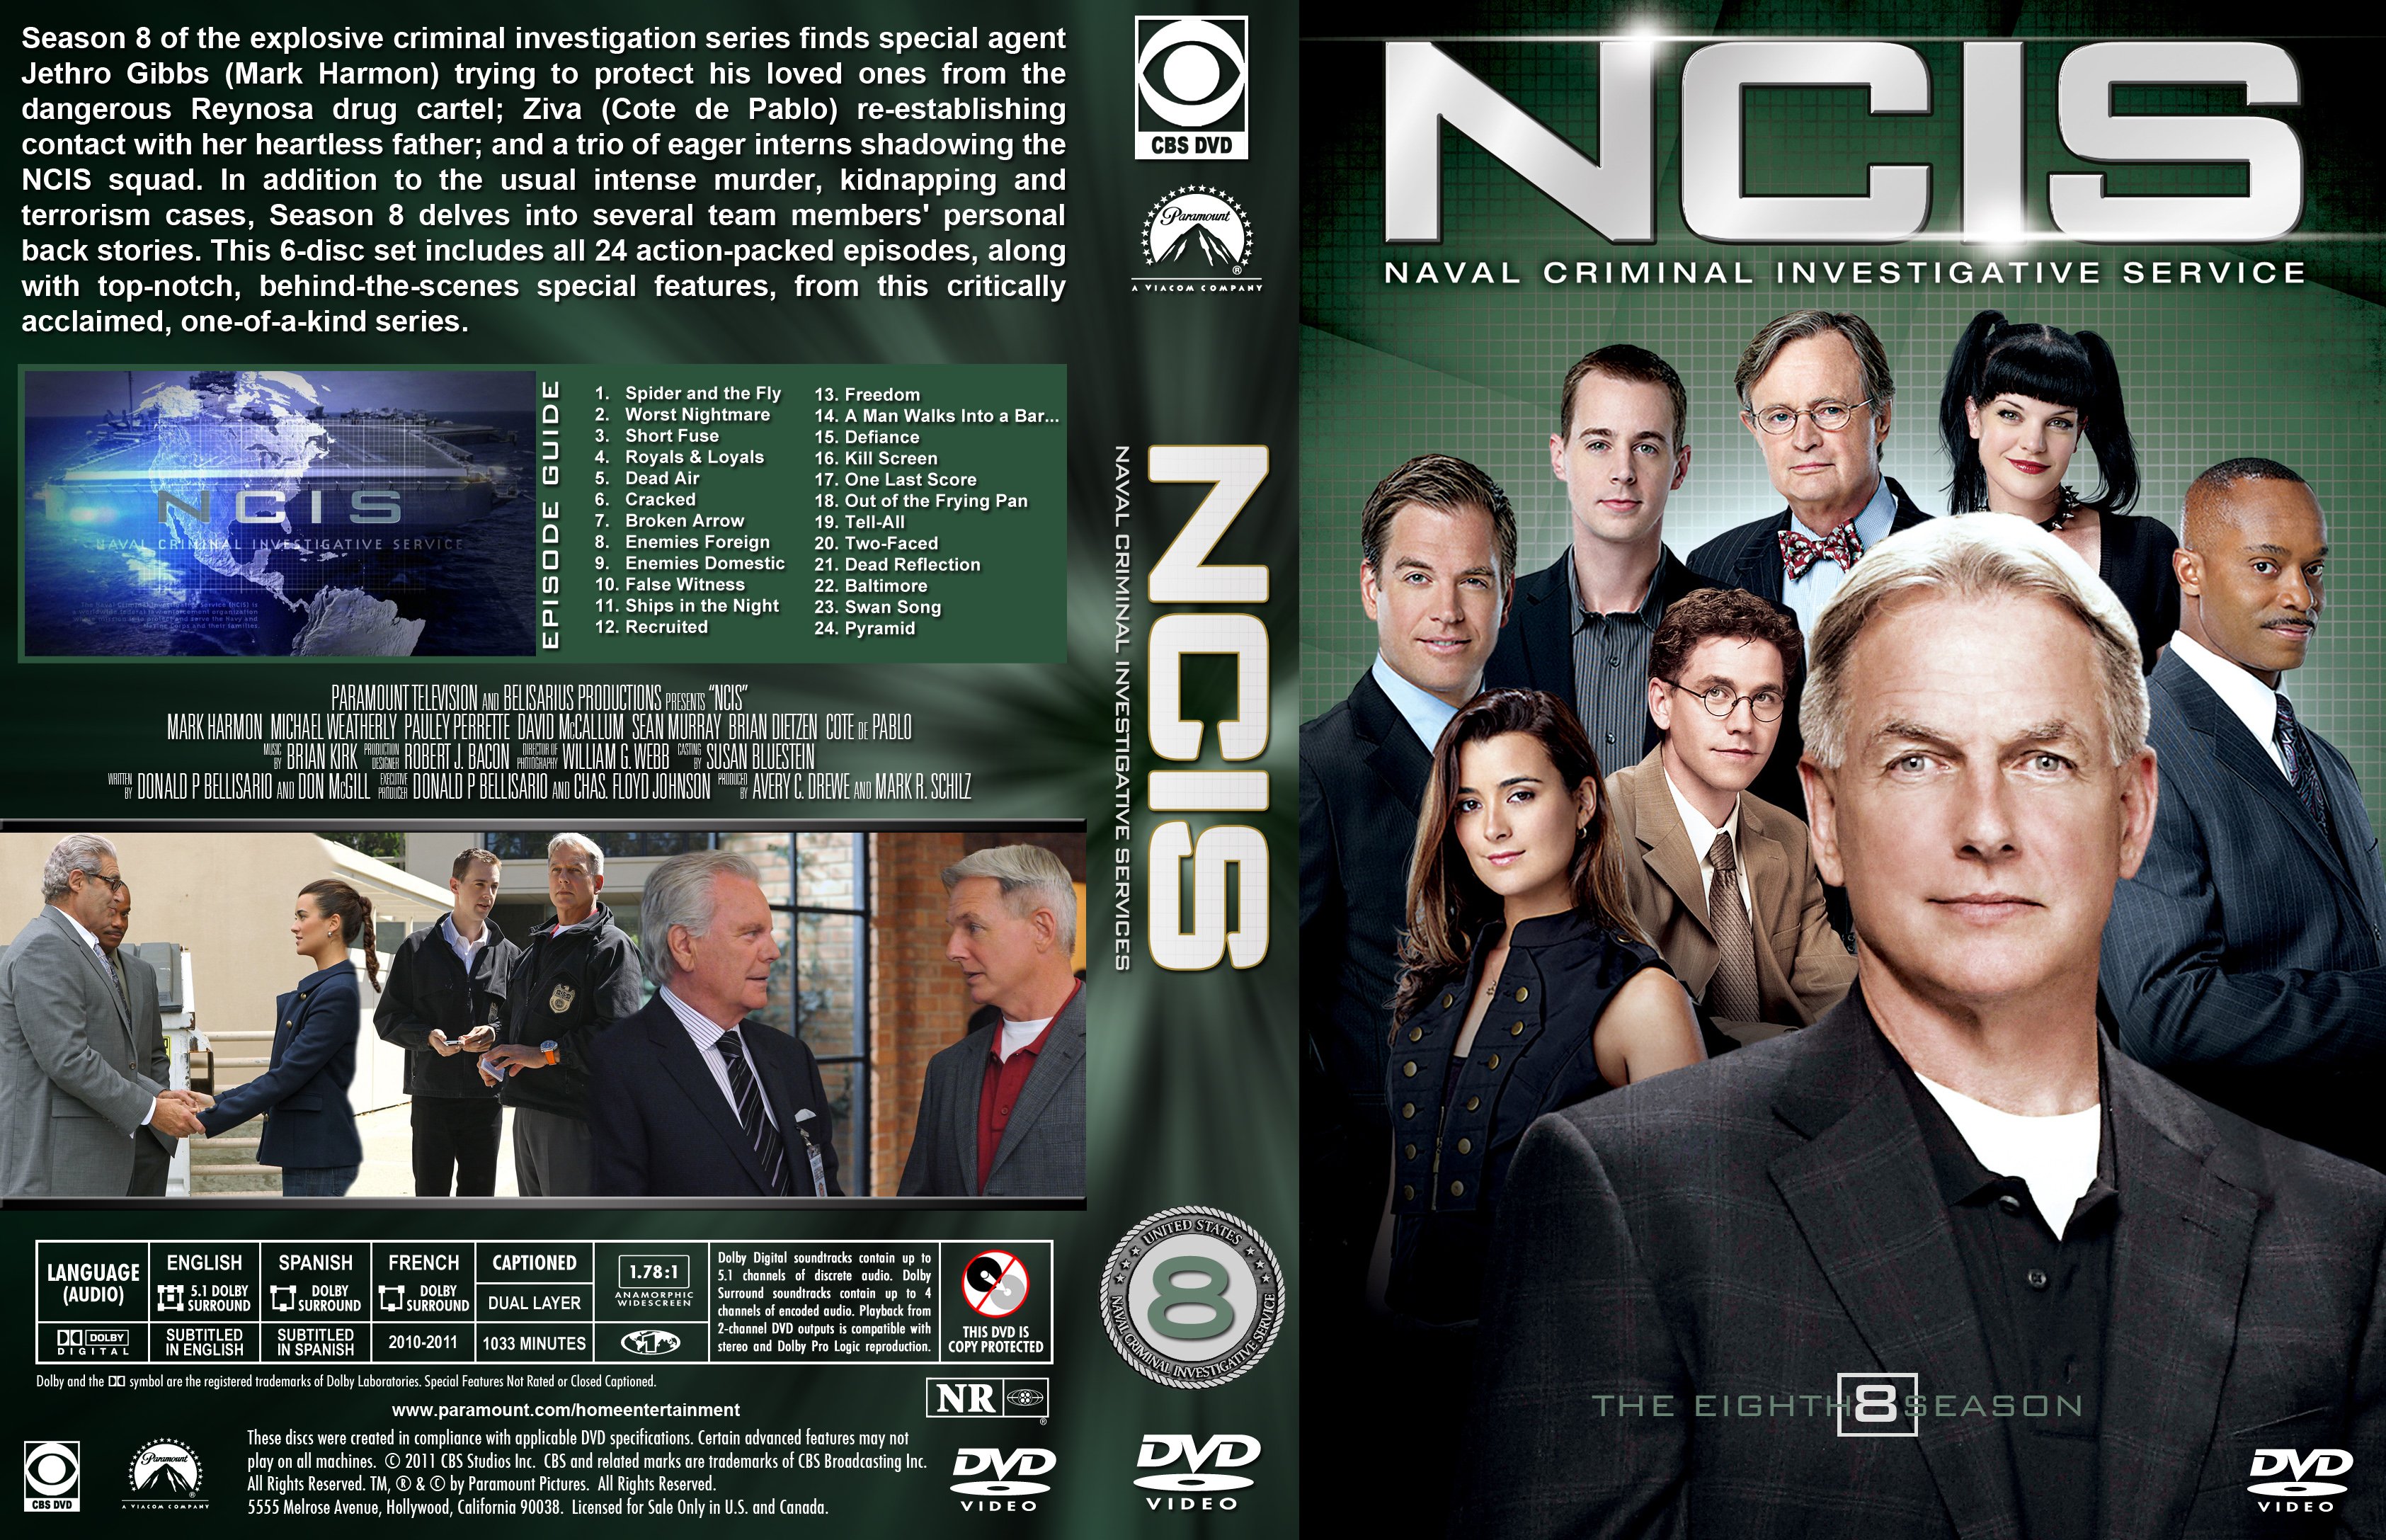 ncis, Series, Crime, Drama, Procedural, Military, Navy Wallpaper